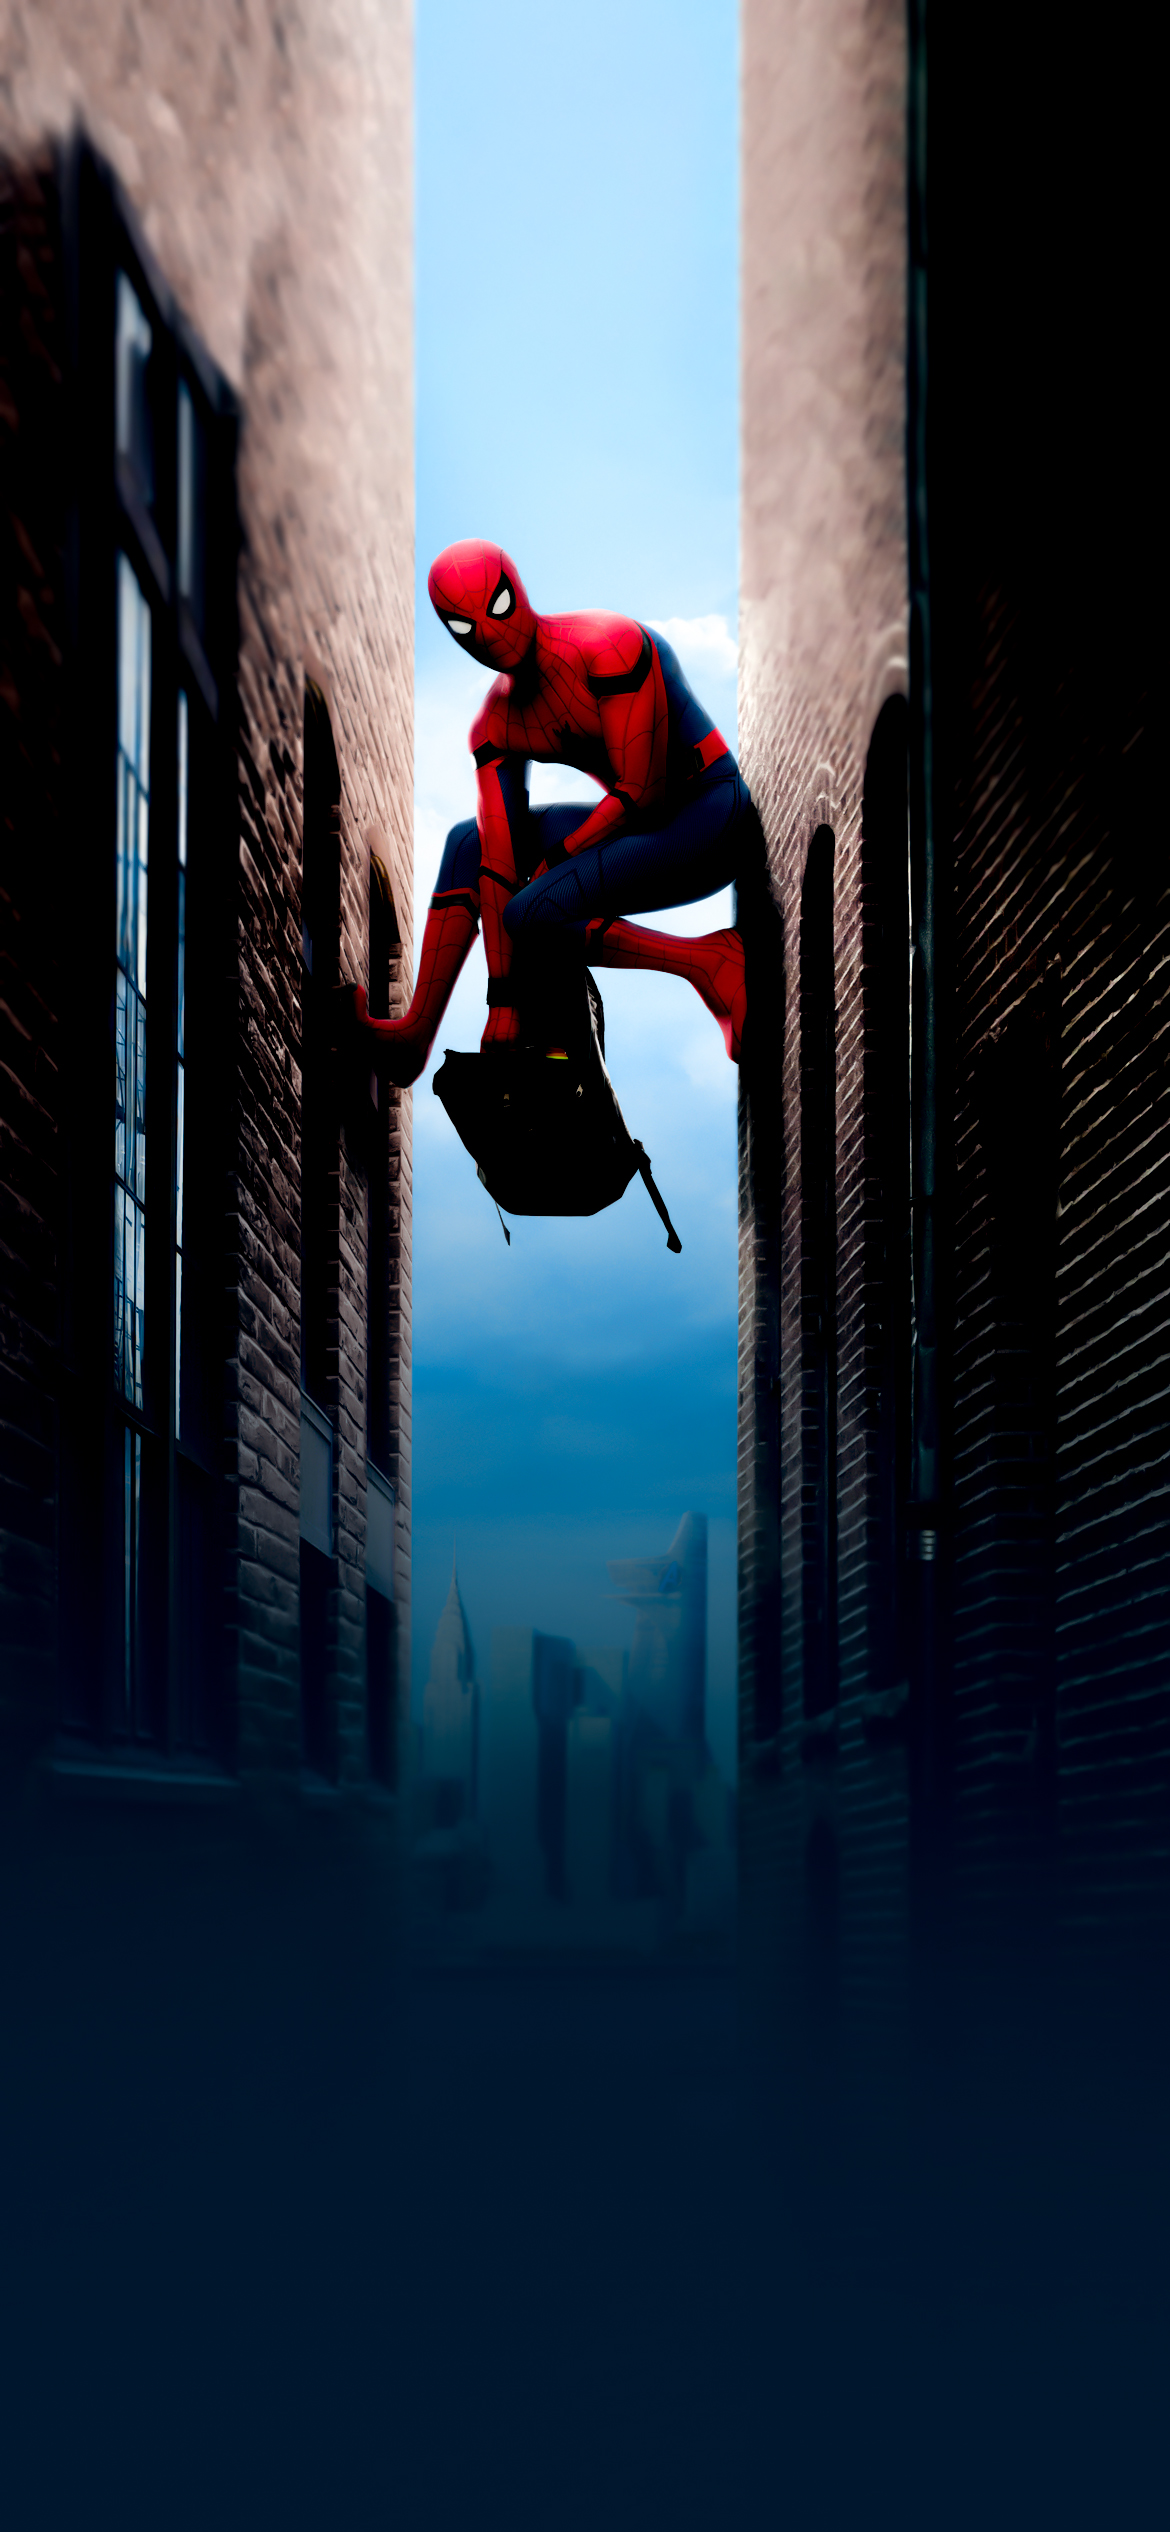 Spiderman 2099 4K wallpaper download